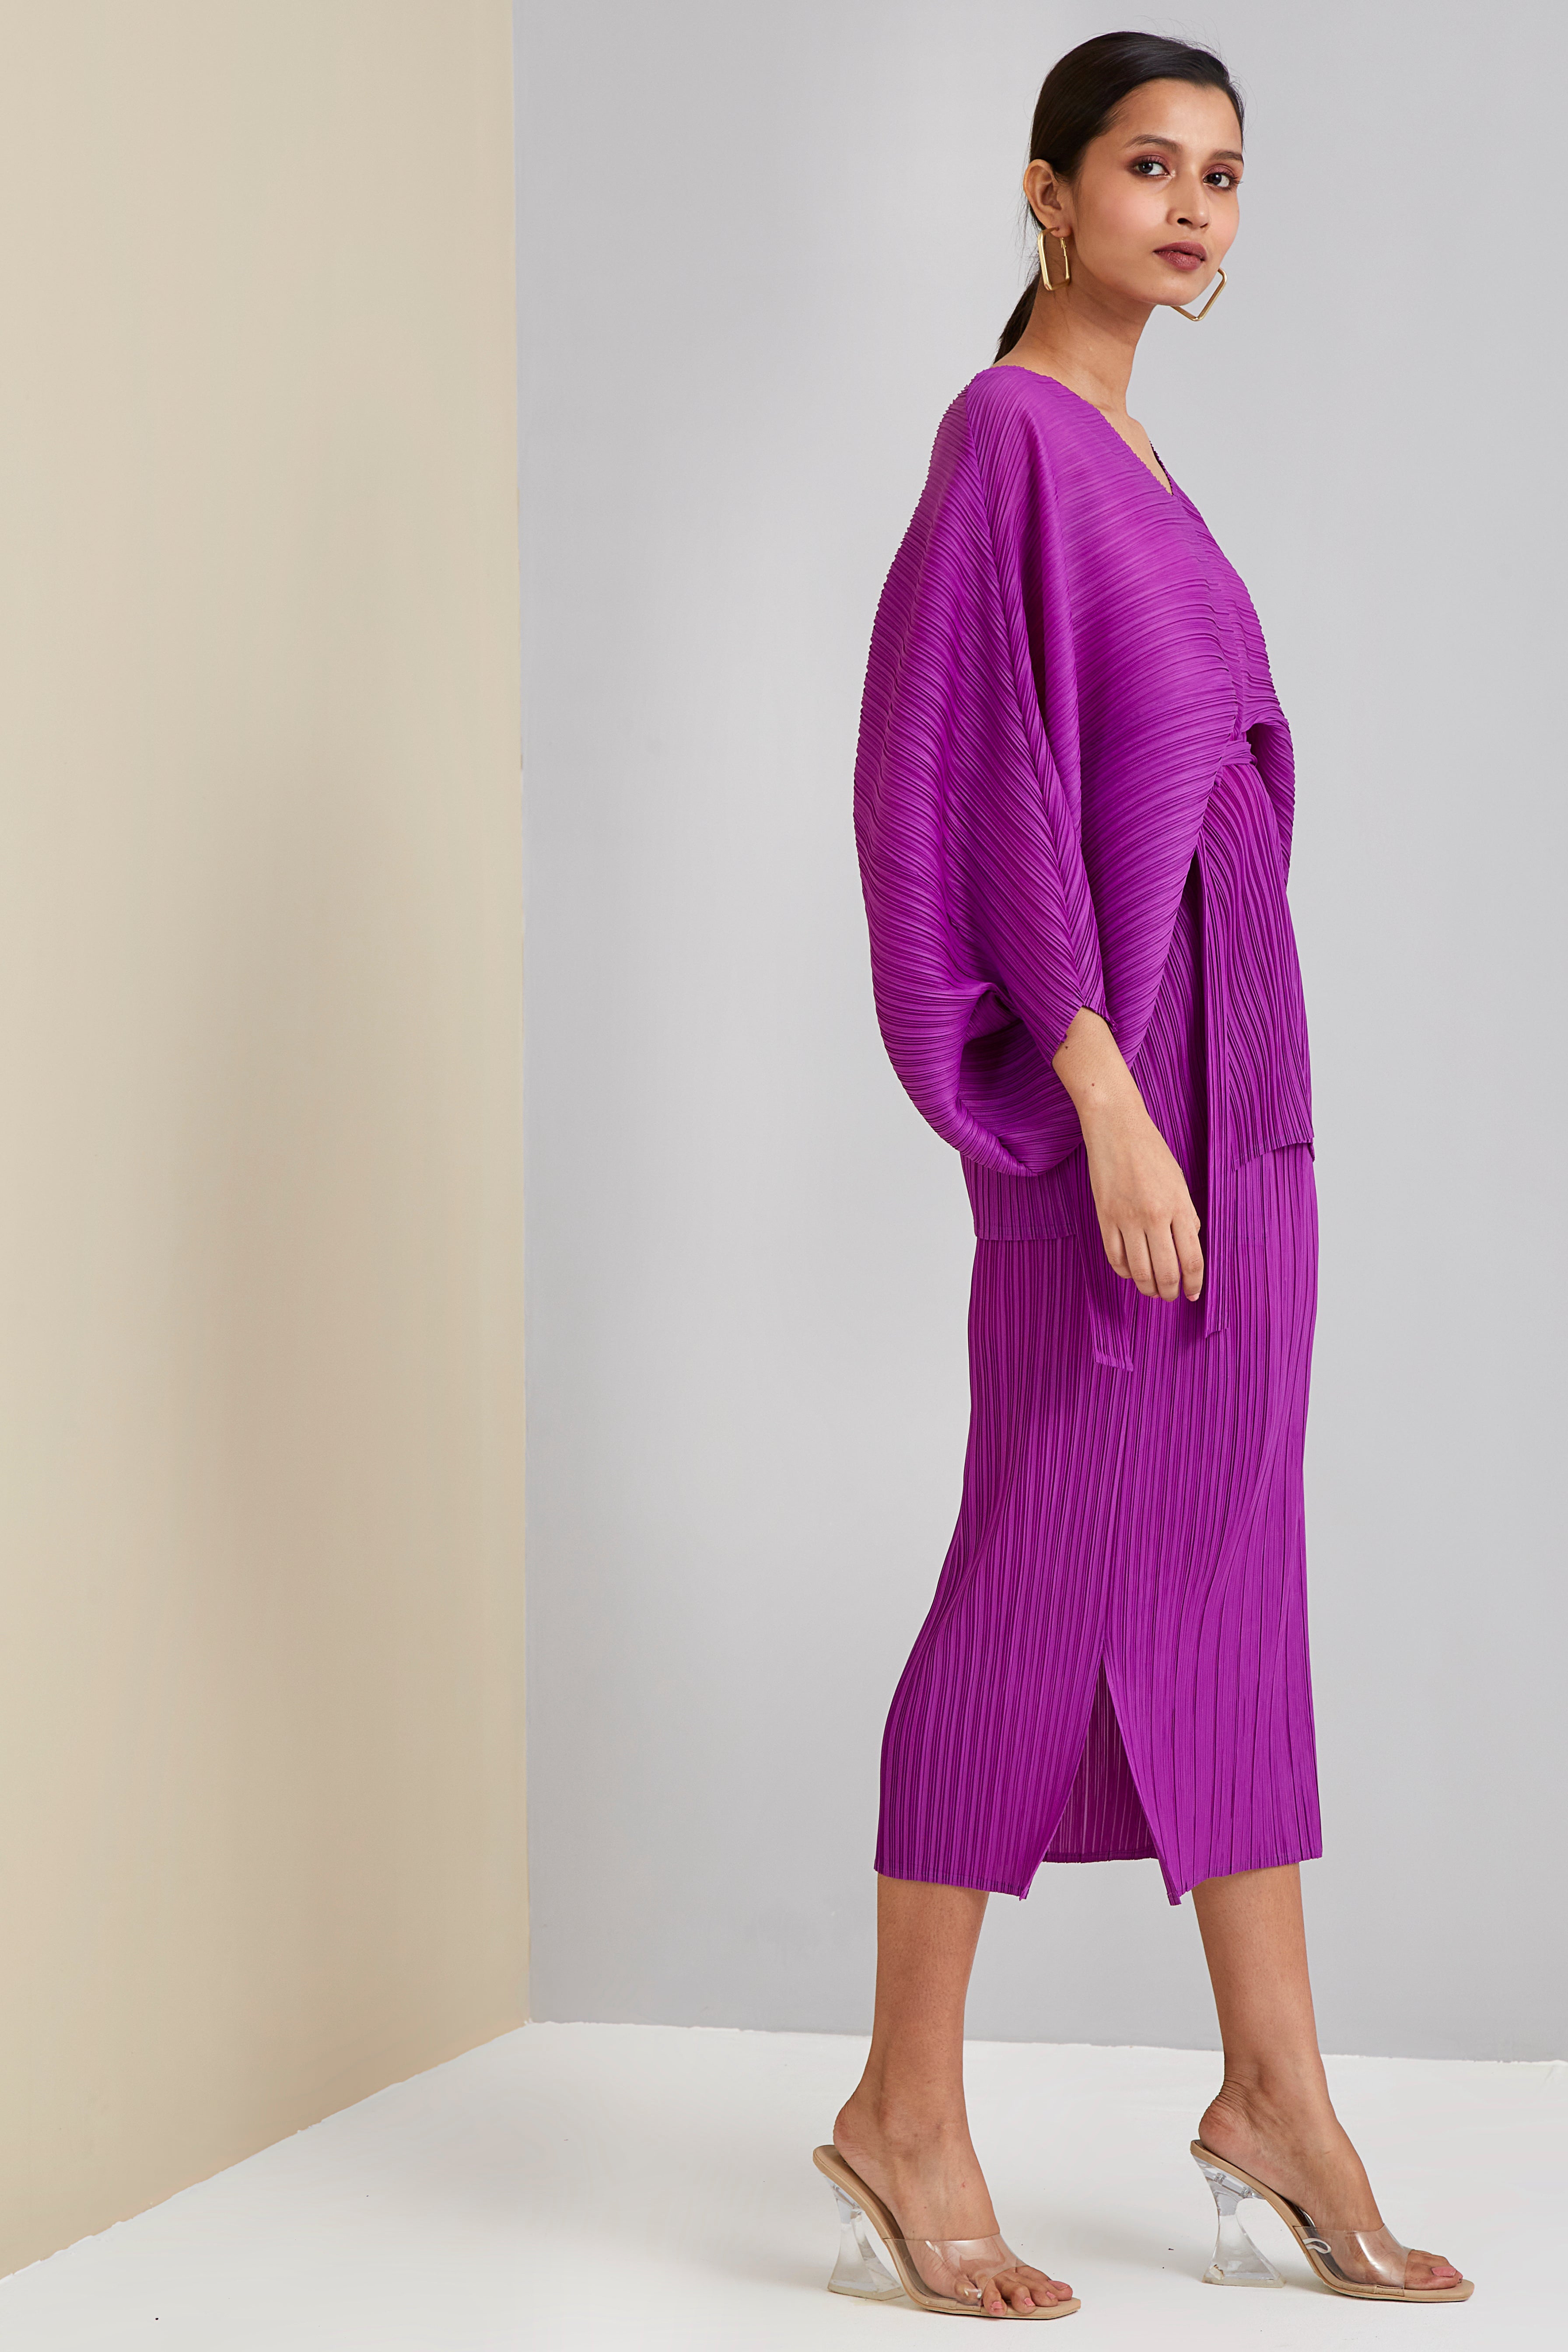 Aika Skirt Set - Bright Purple